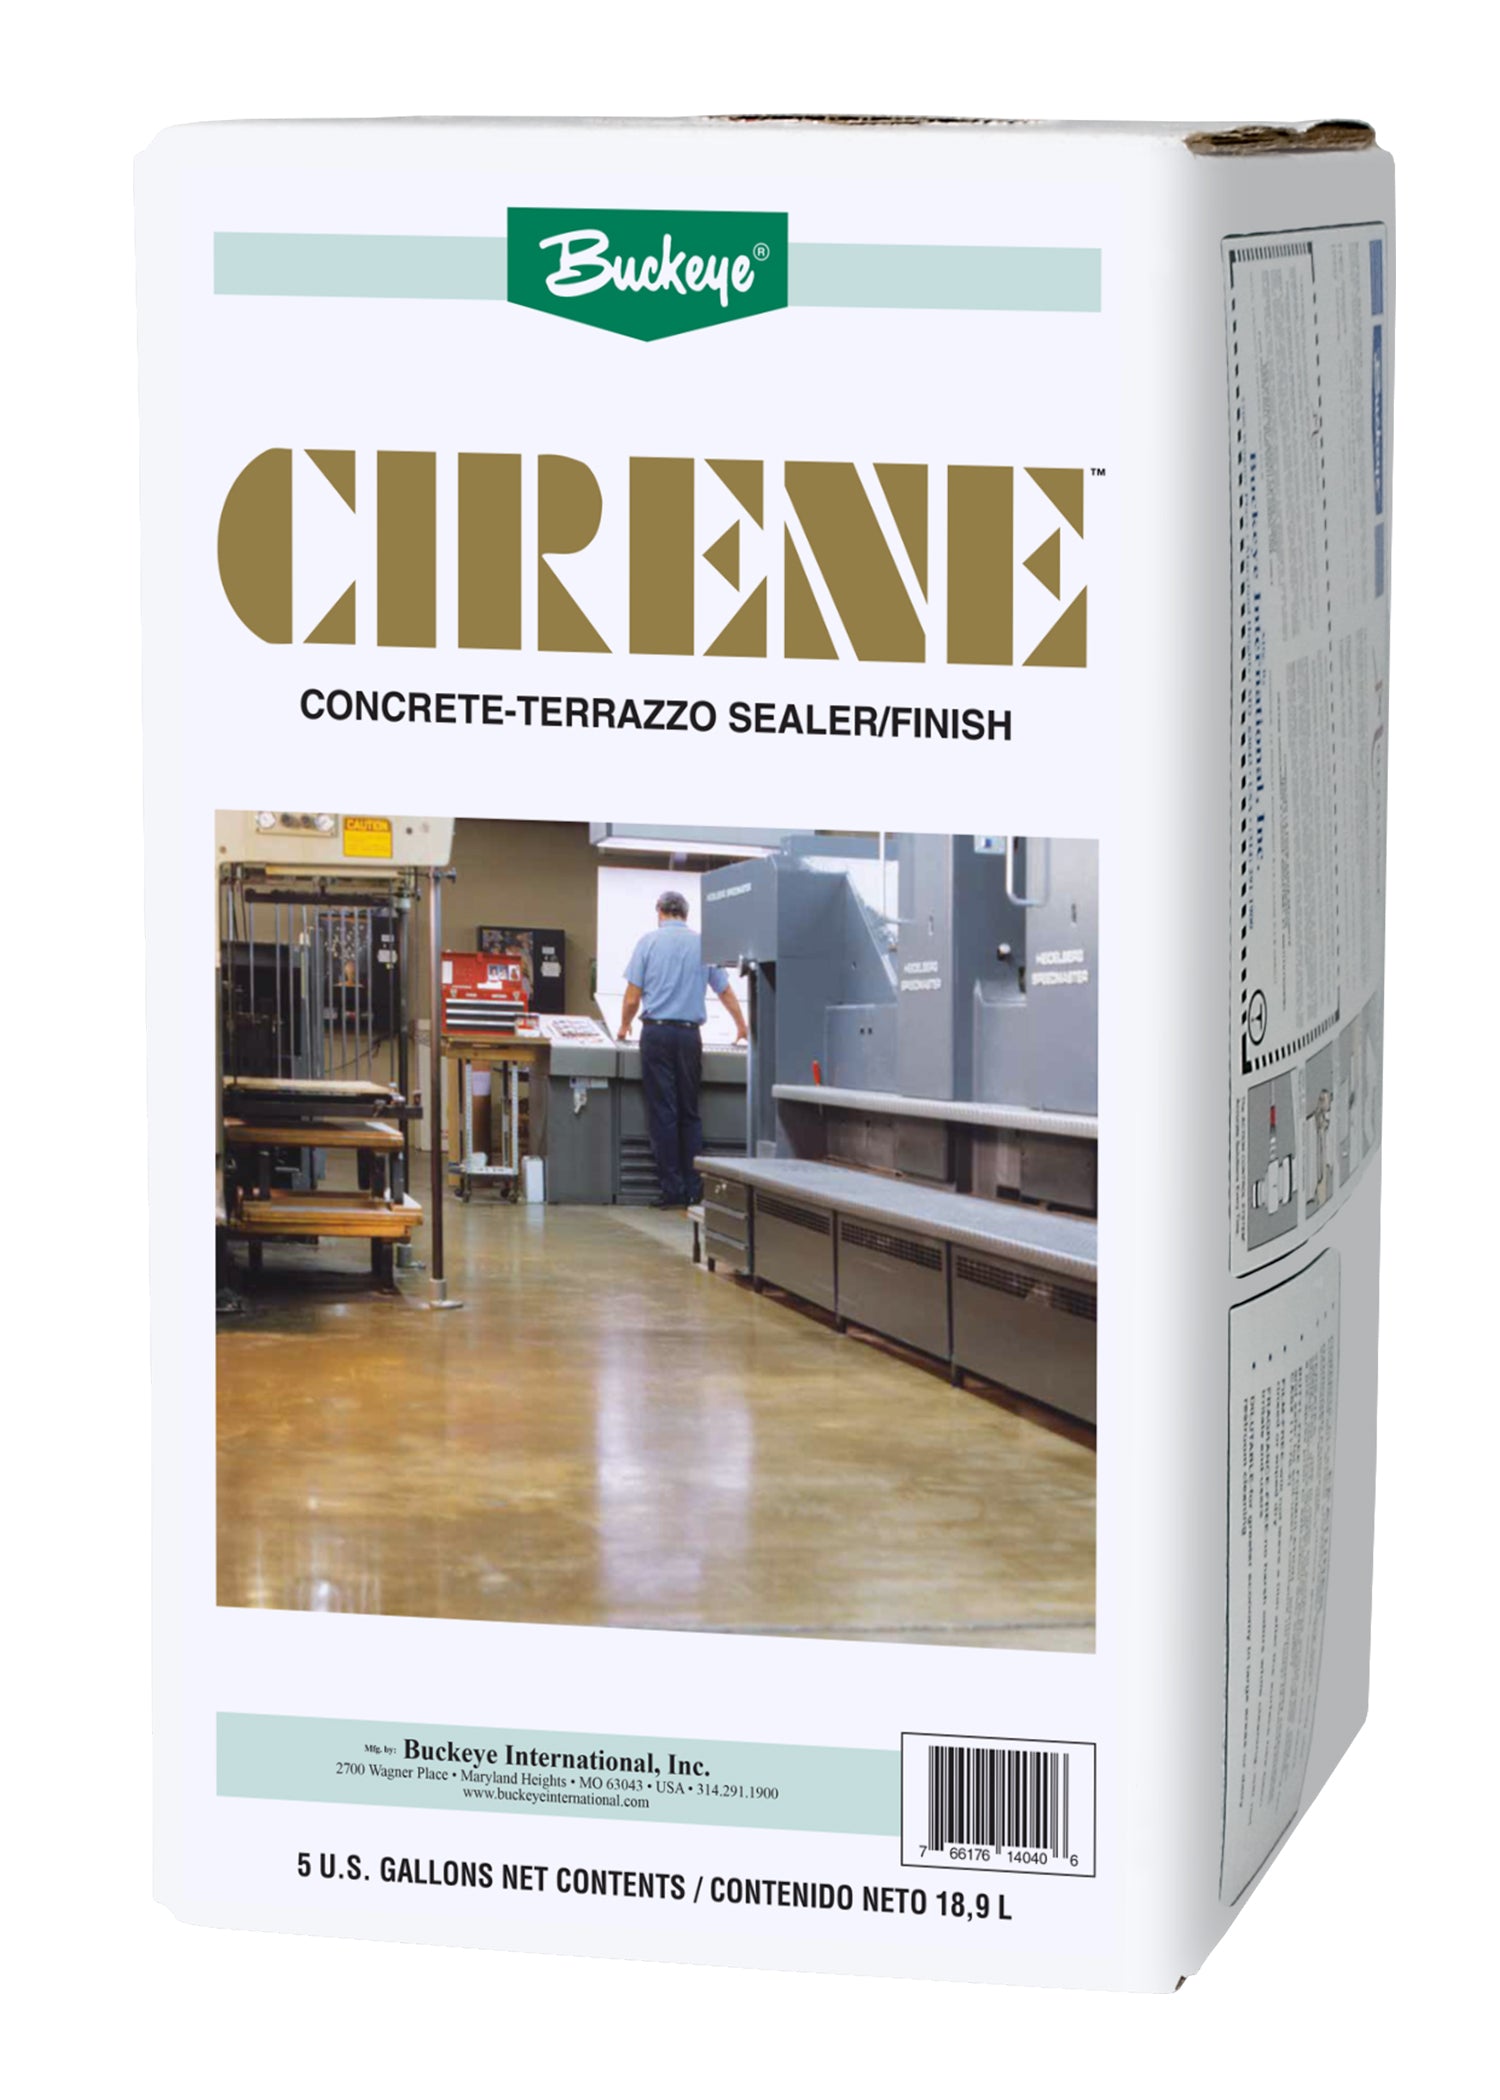 Cirene Concrete Terrazzo Sealer/Finish | IRIS